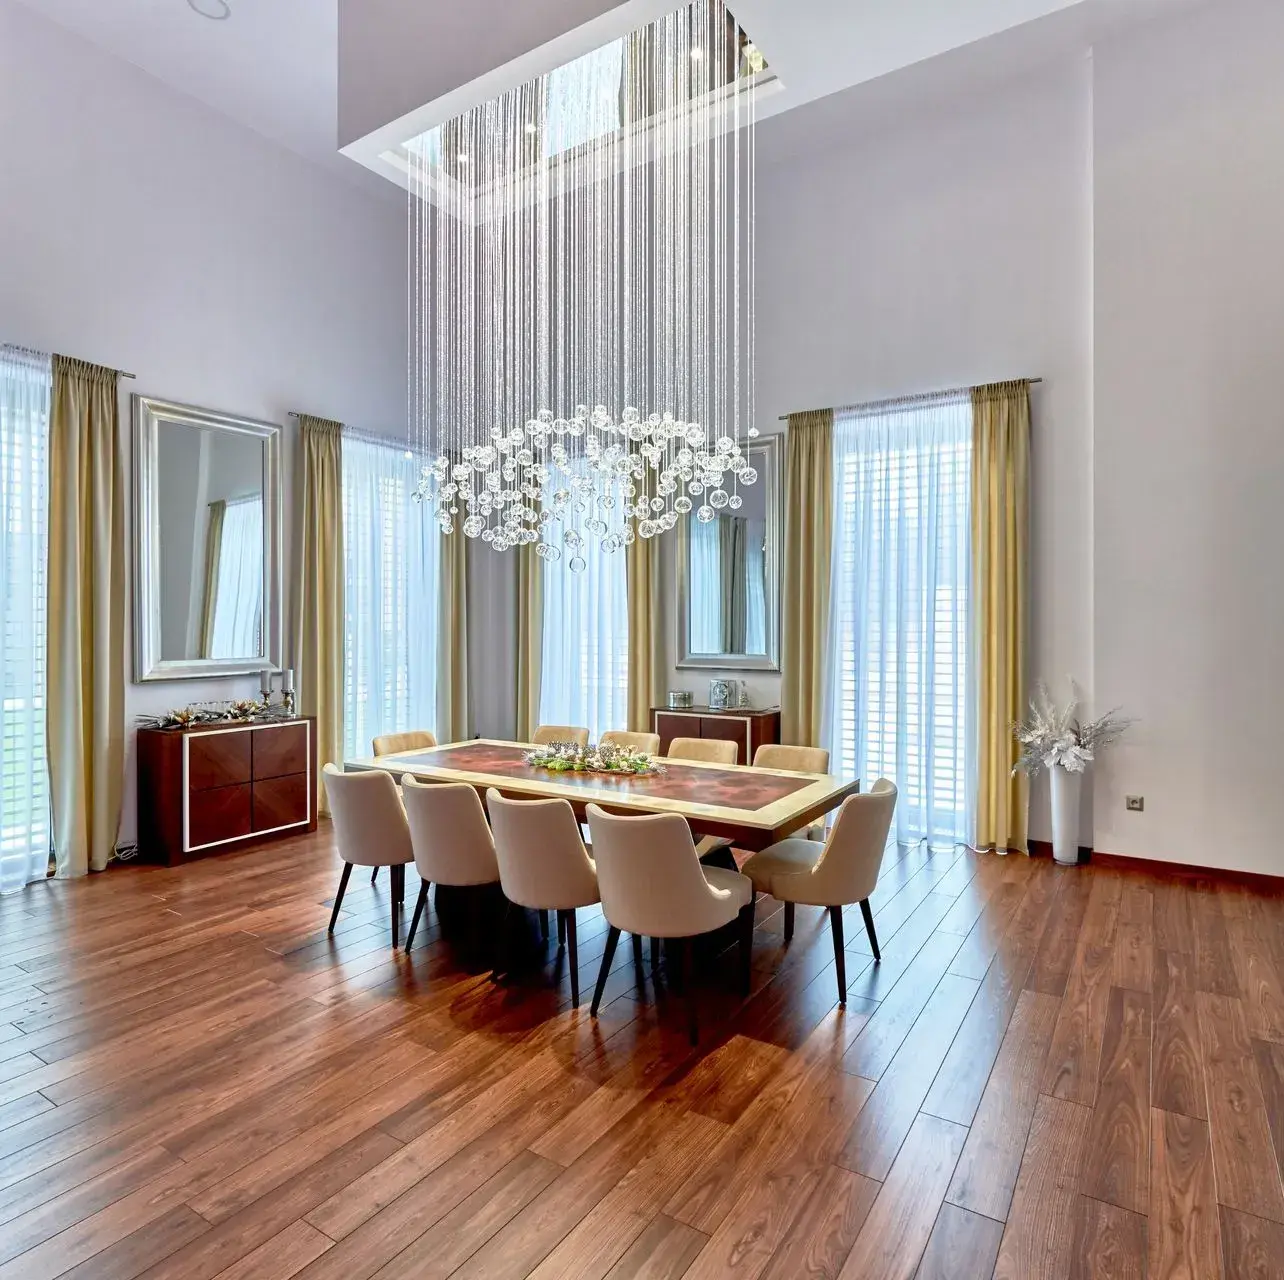 Luxury private house modern interior lighting